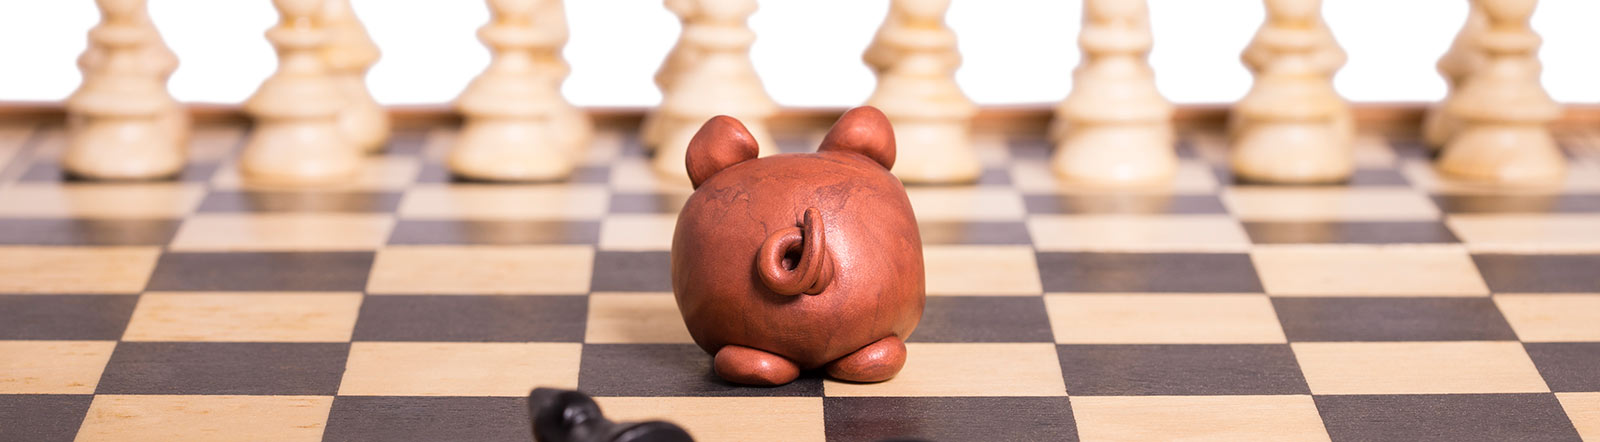 Piggy bank on chess board.